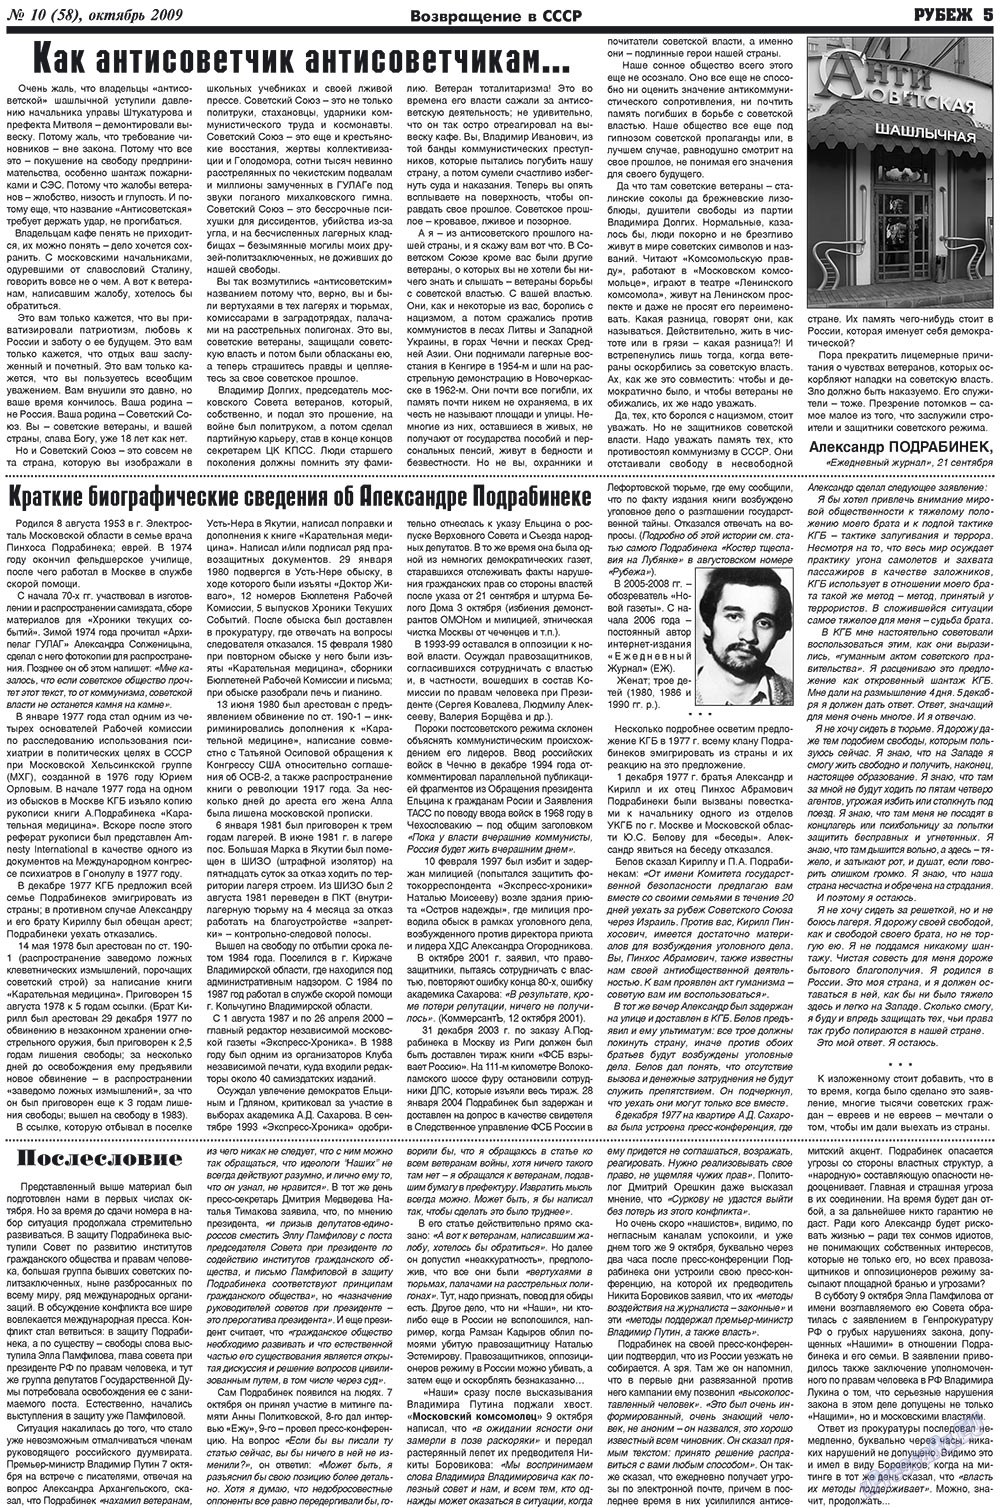 Рубеж, газета. 2009 №10 стр.5